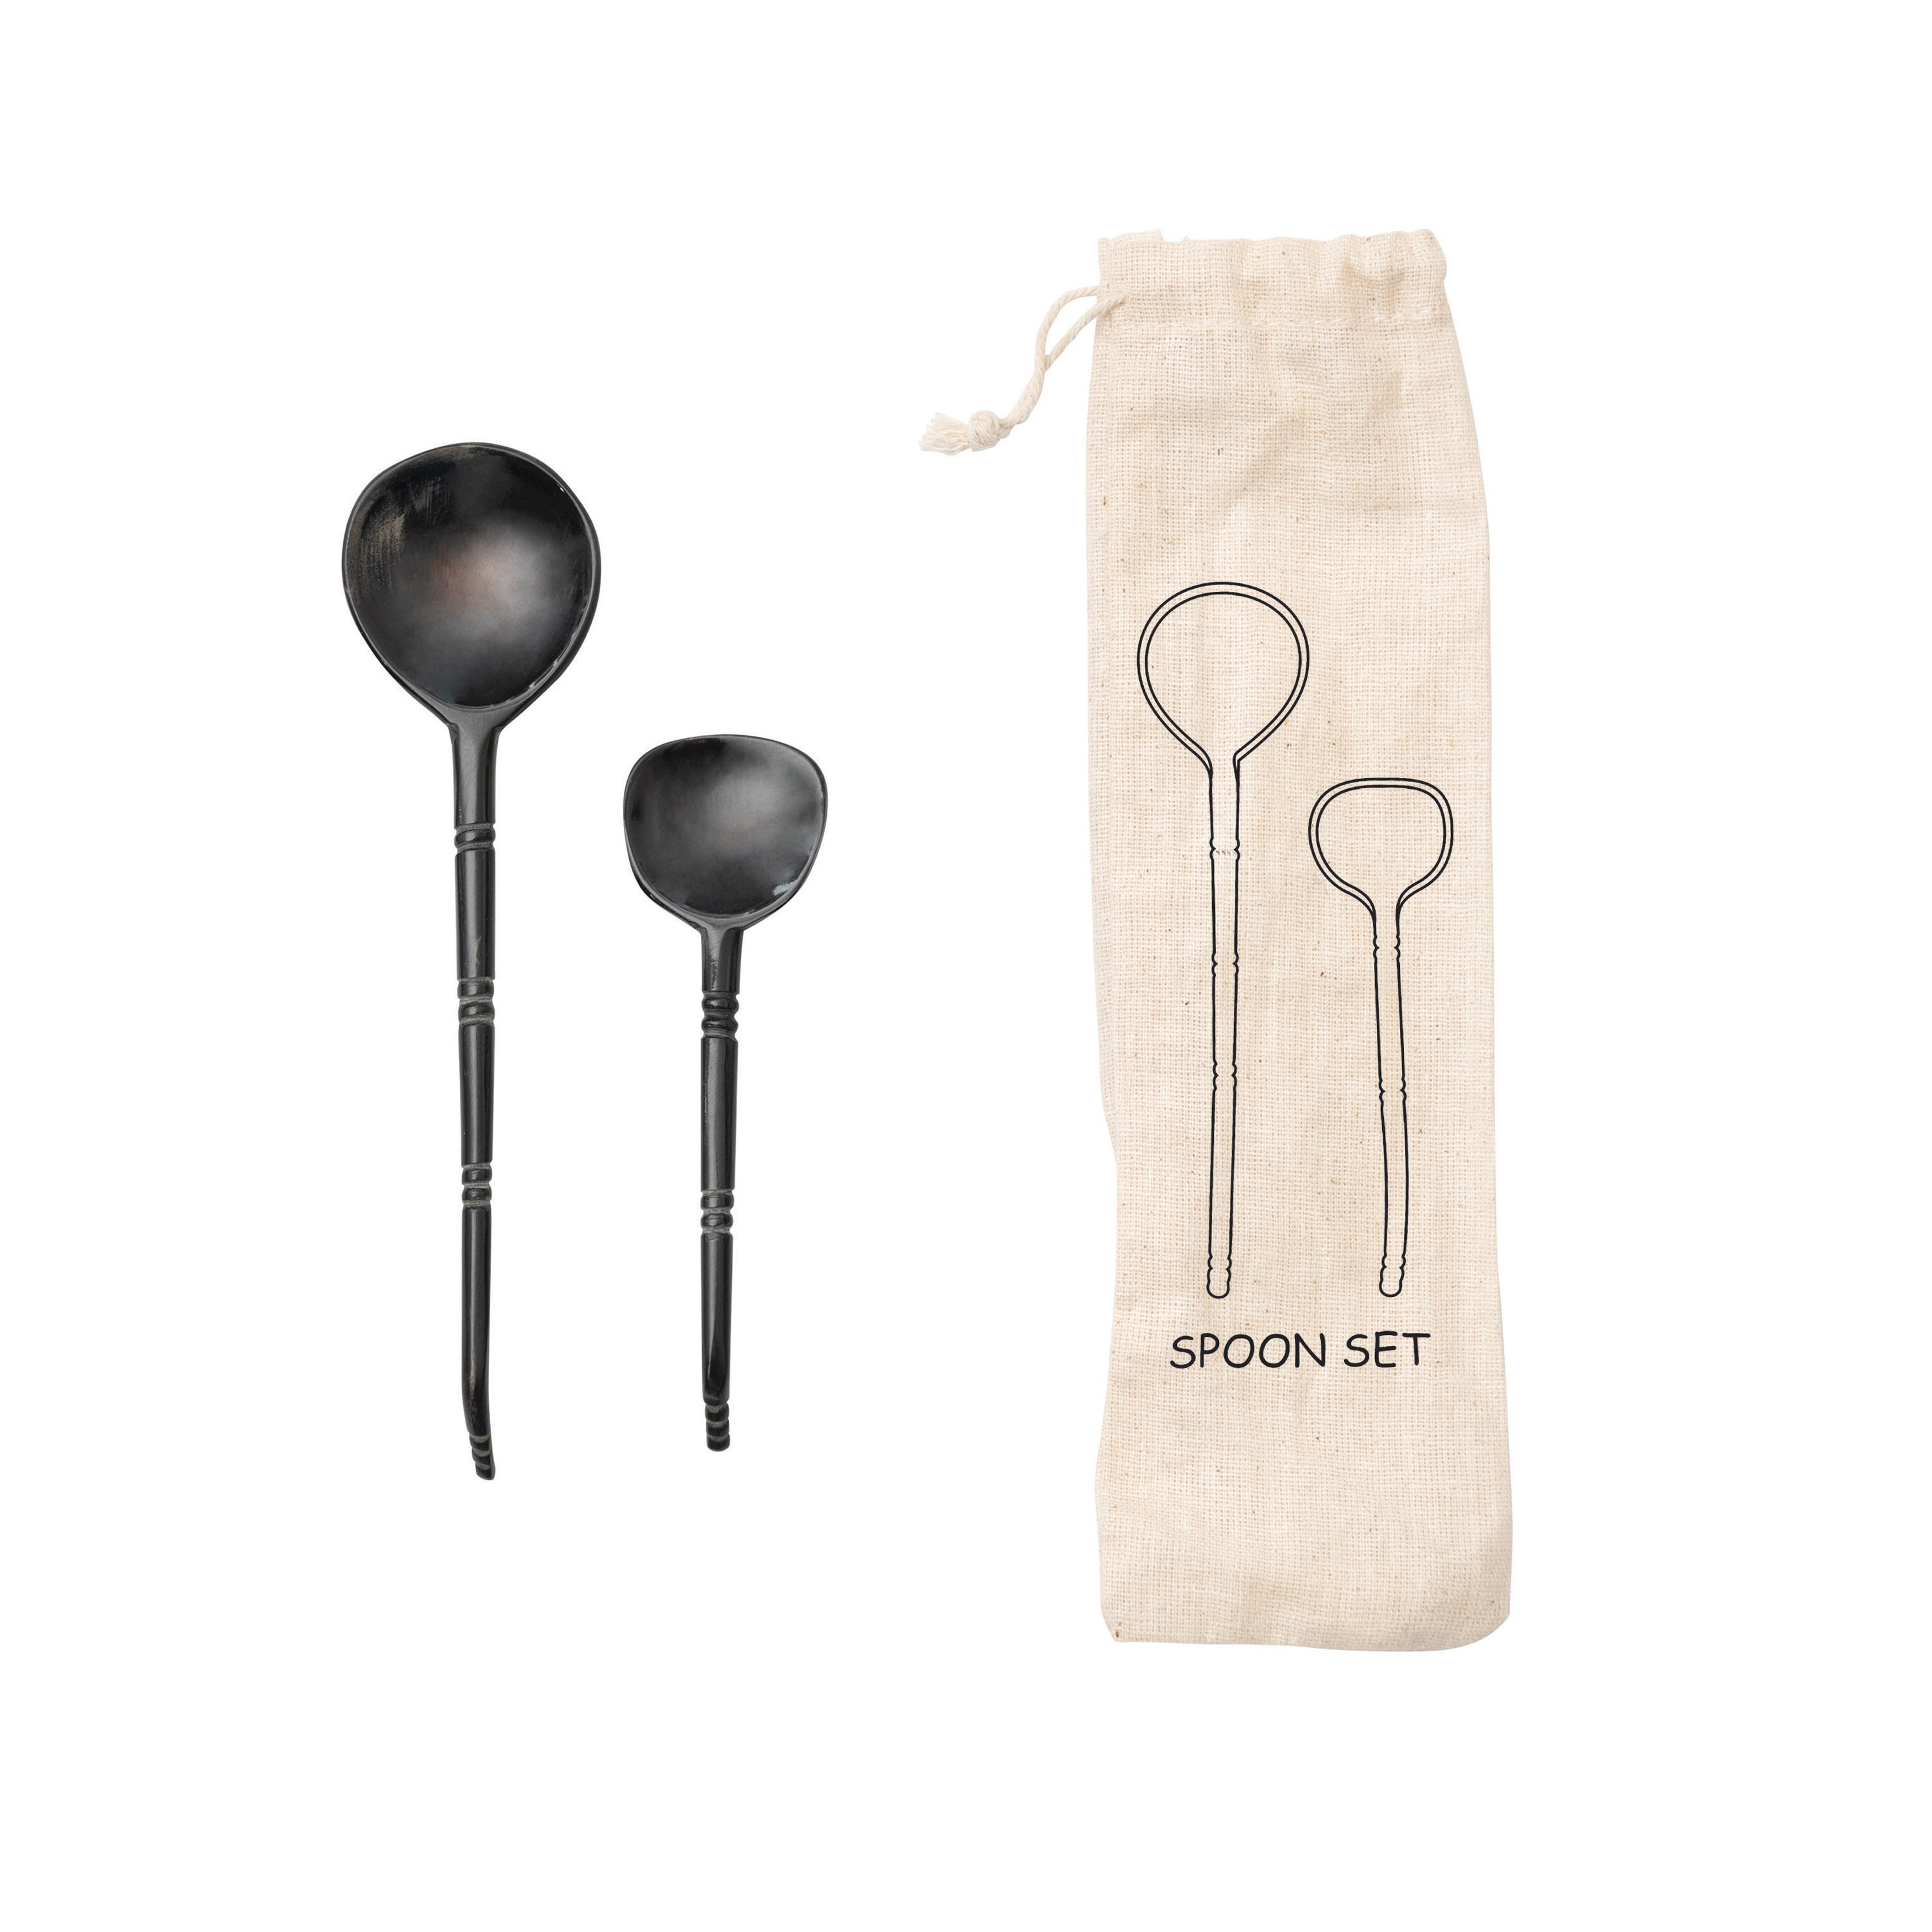  Horn Spoons, Set of 2 in Printed Drawstring Bag - Image 0